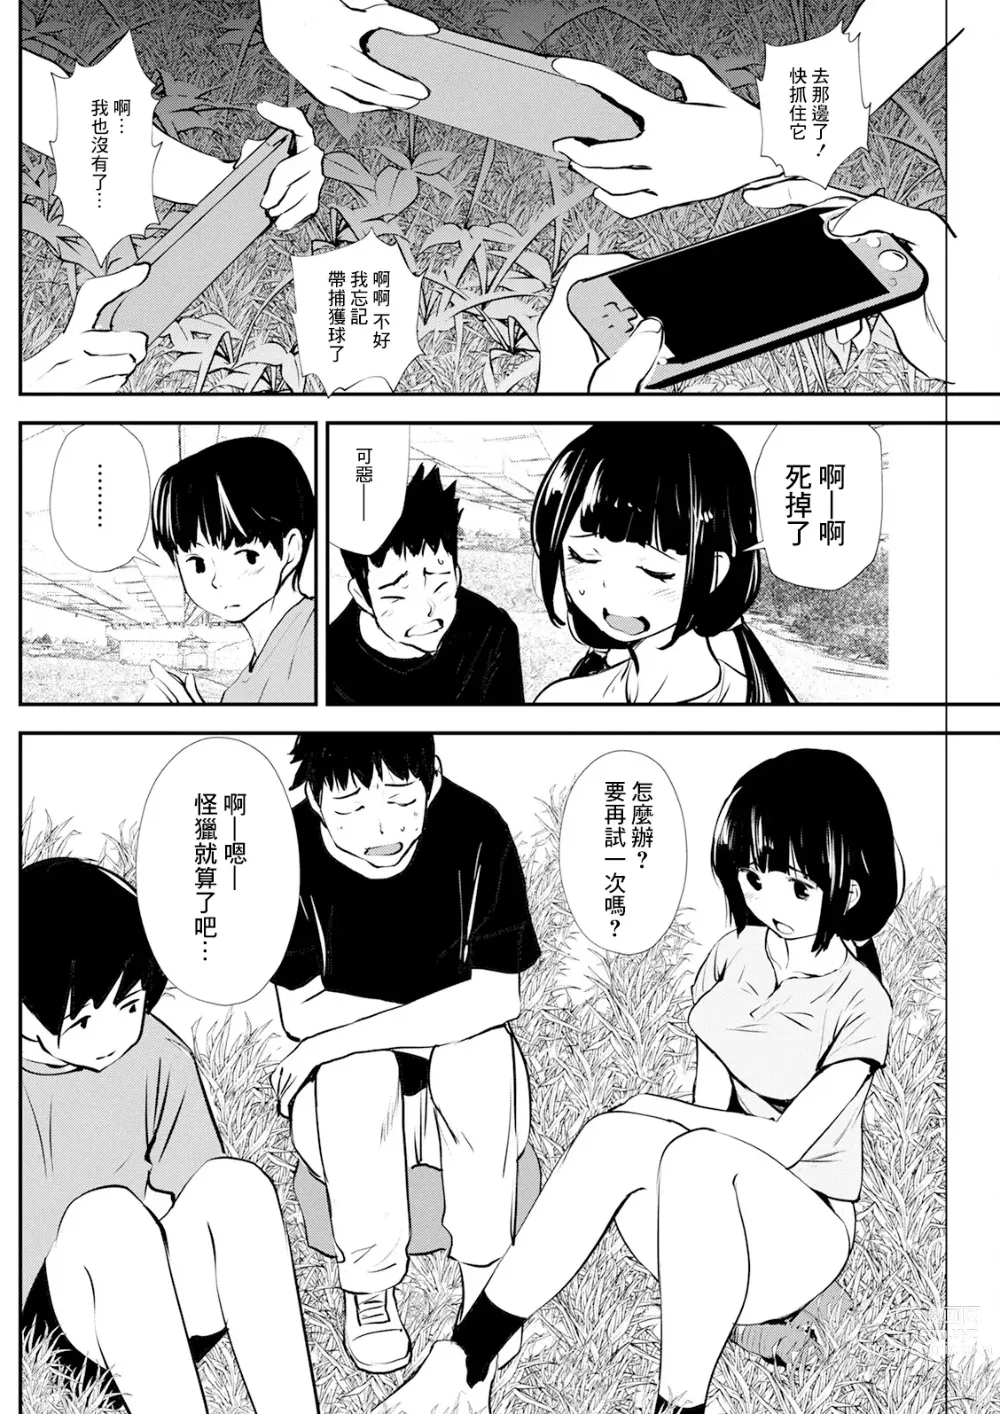 Page 2 of manga 3-nin no Yakusoku - Promise of three